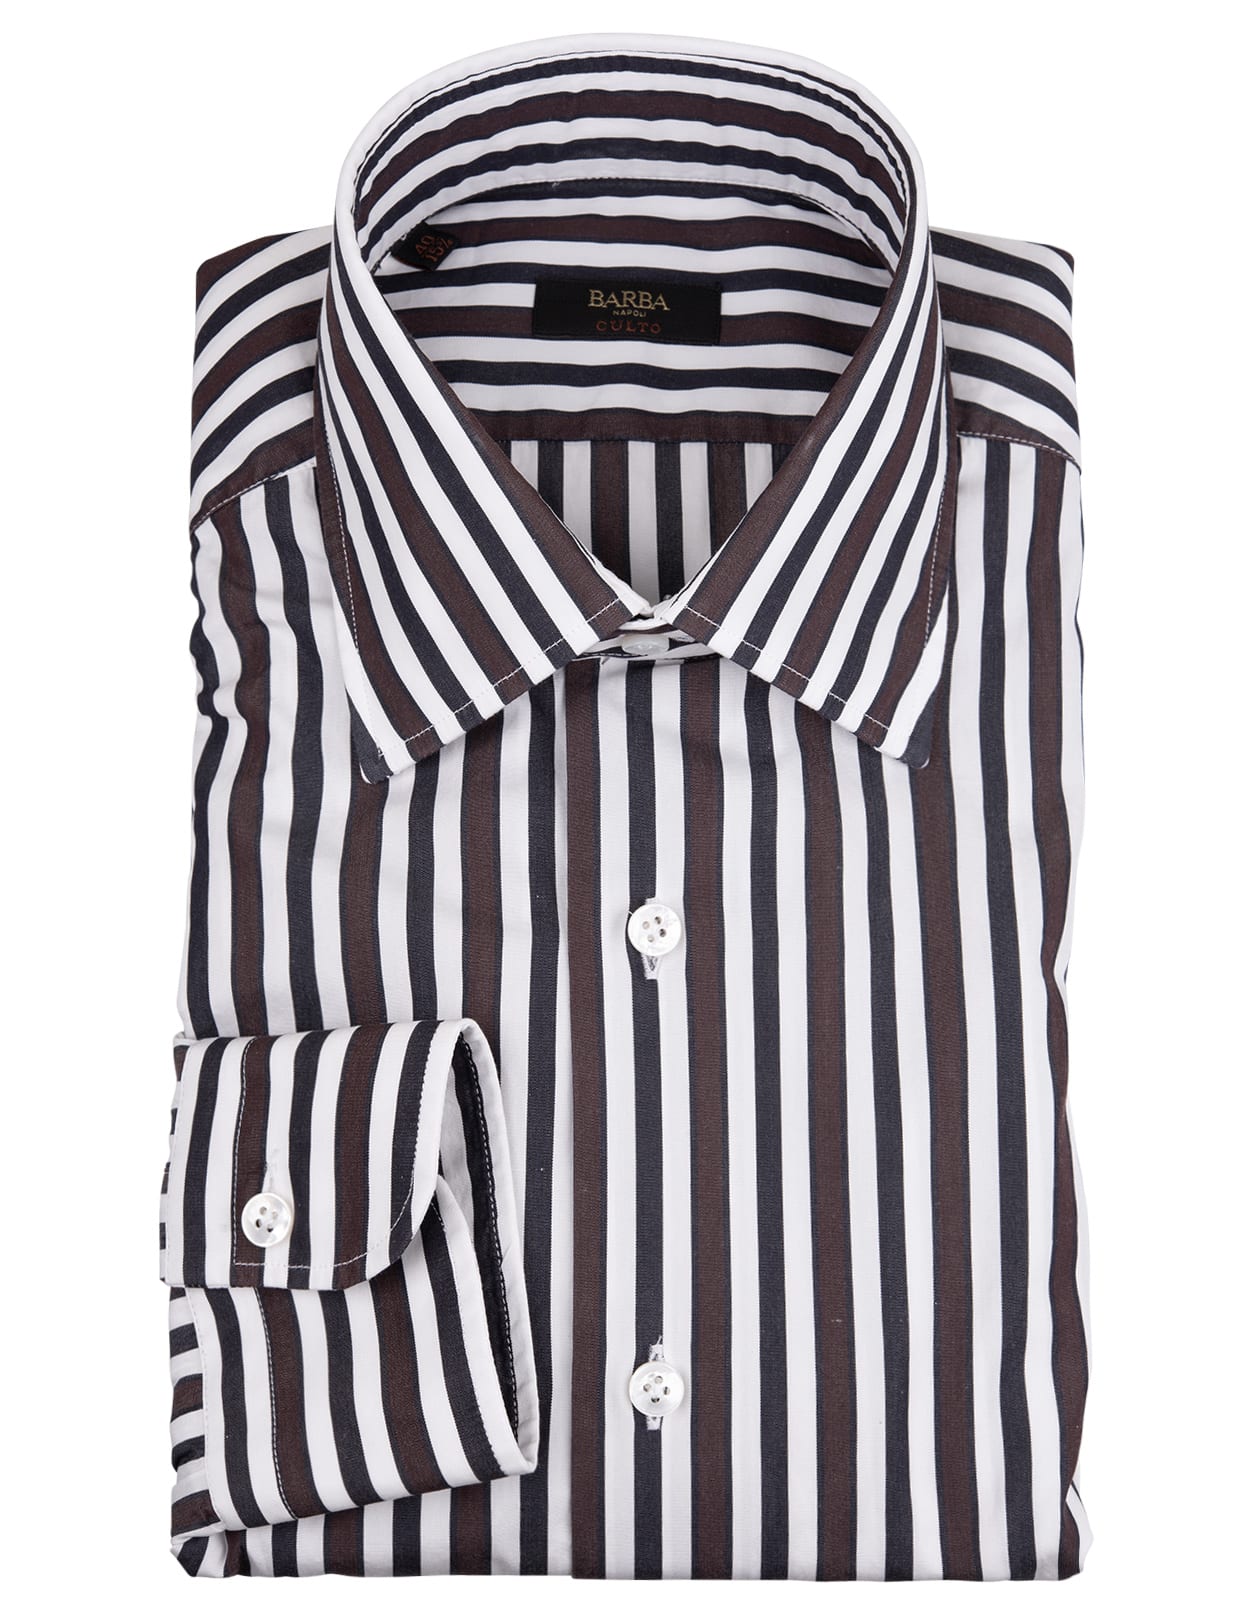 Barba Napoli Man White Cotton Shirt With Black And Brown Stripes Pattern